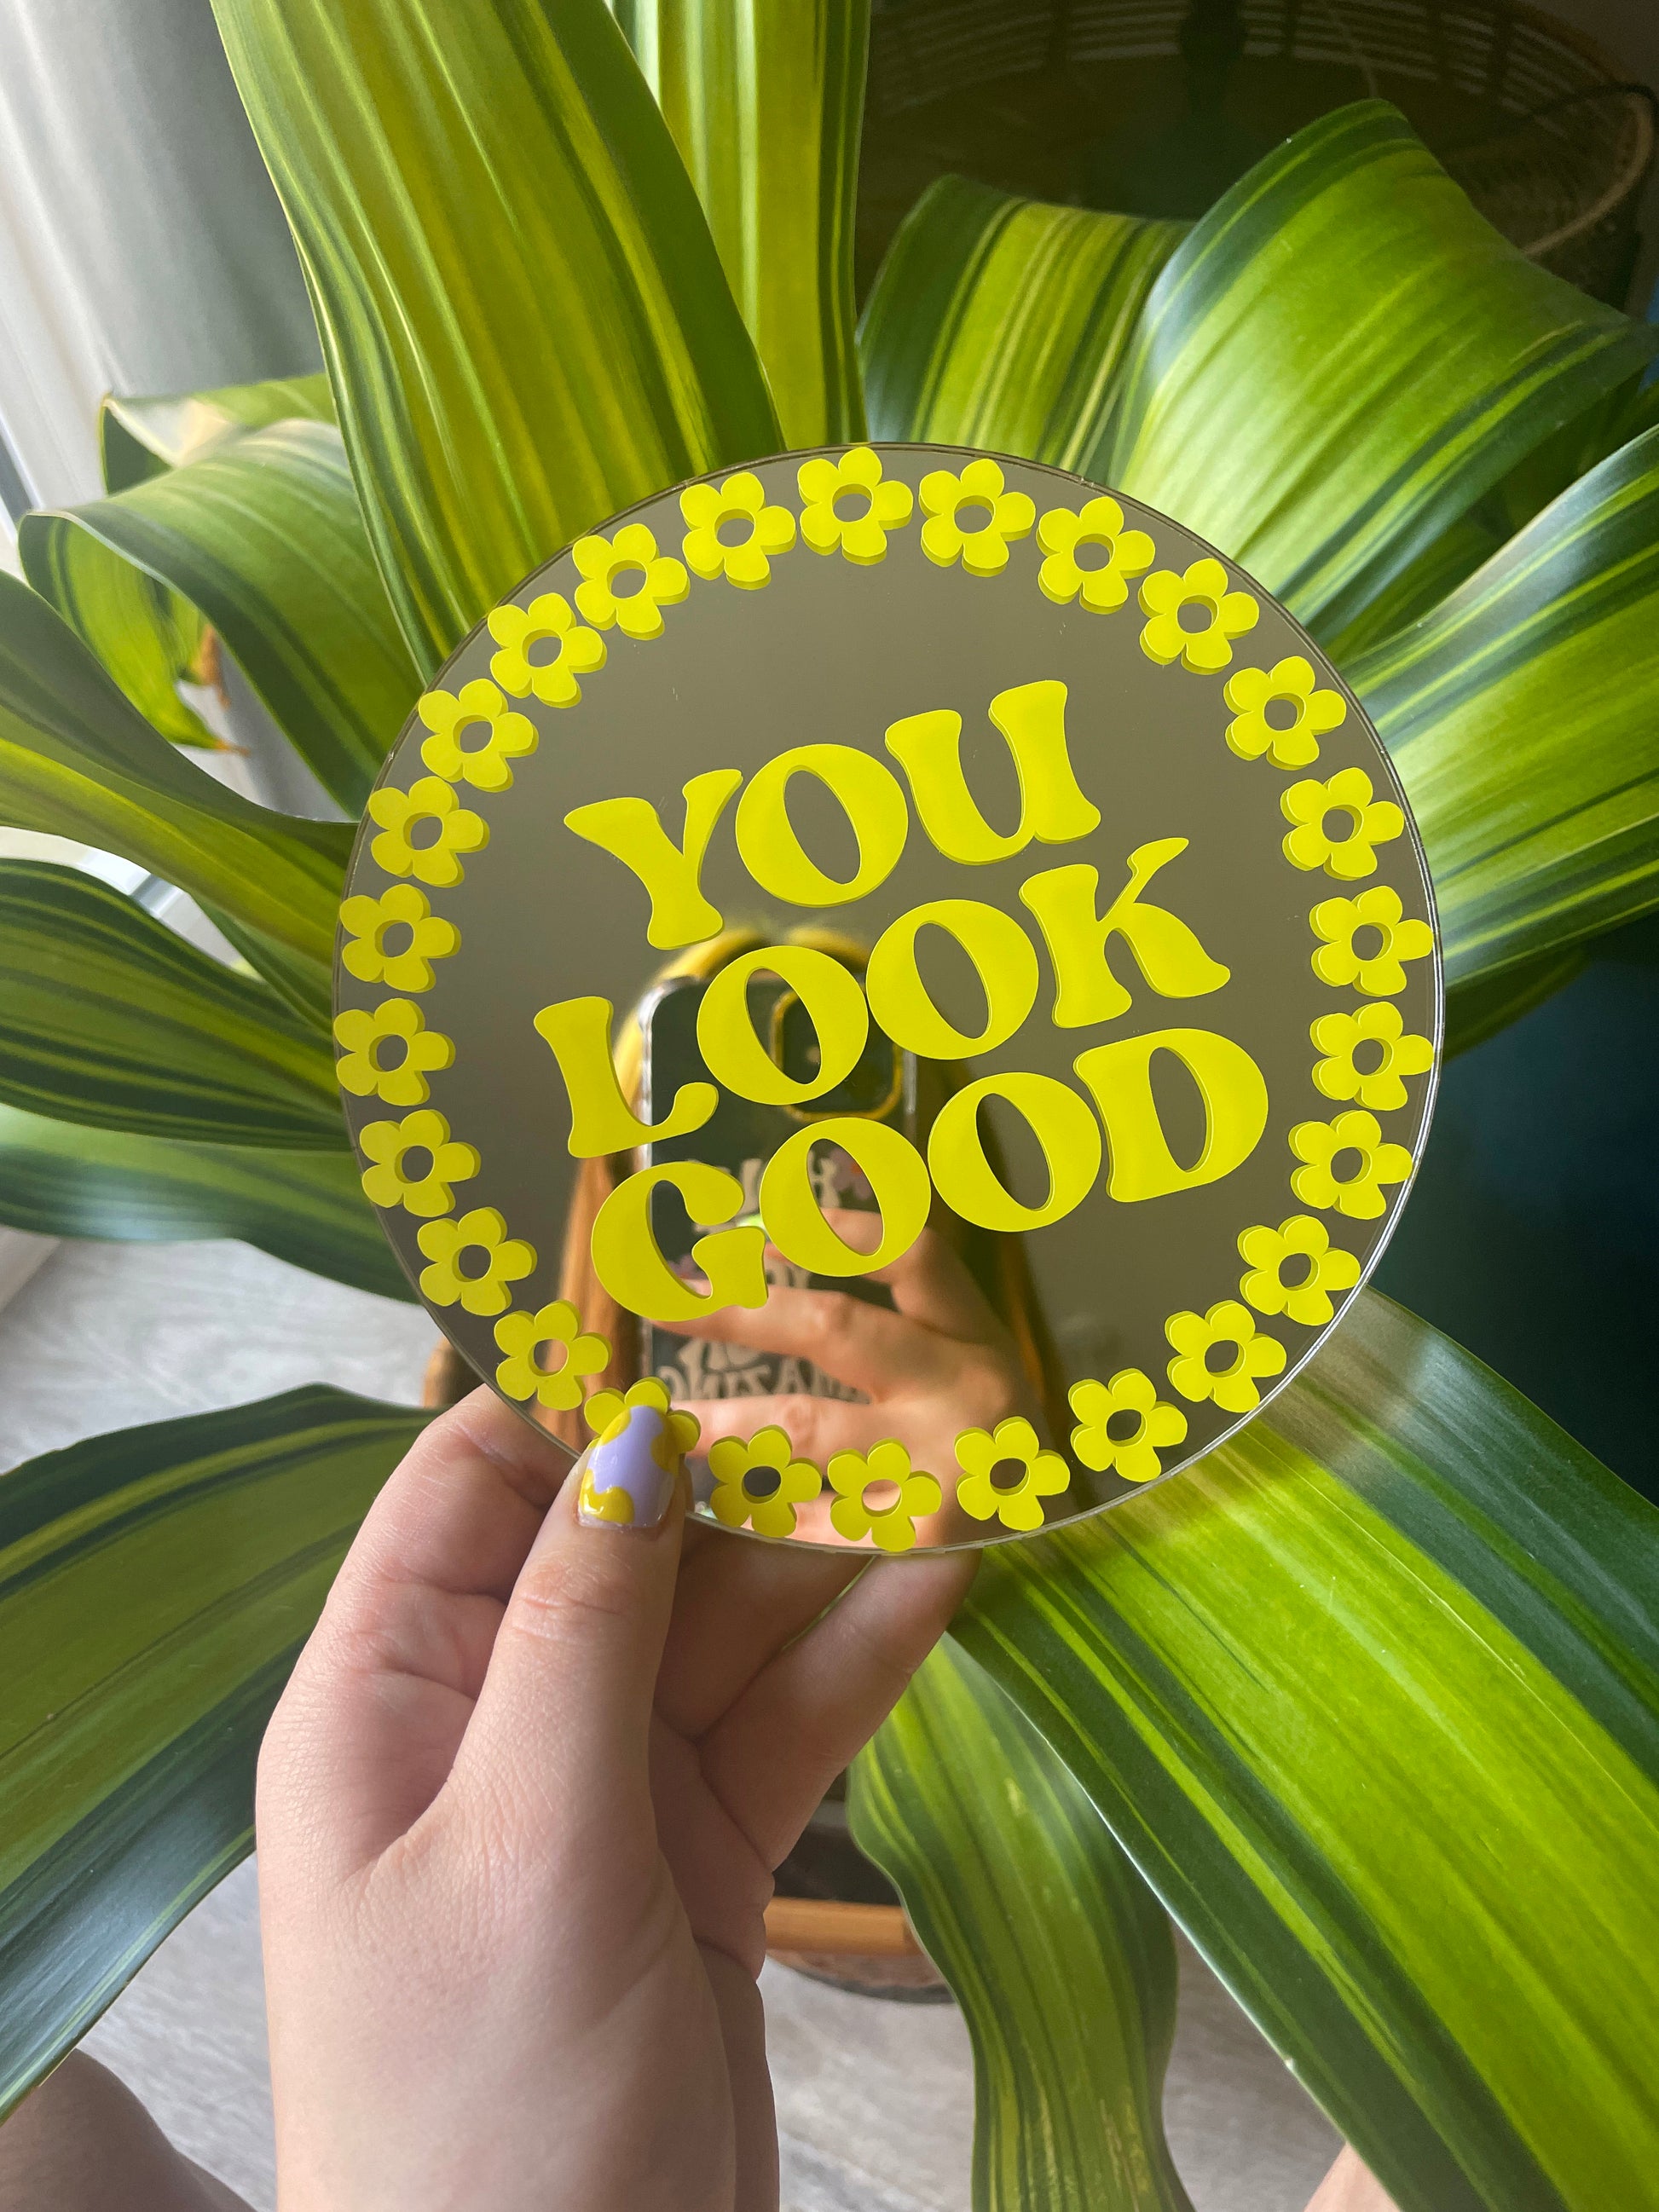 You Look Good Disc Mirror - PrintedWeird